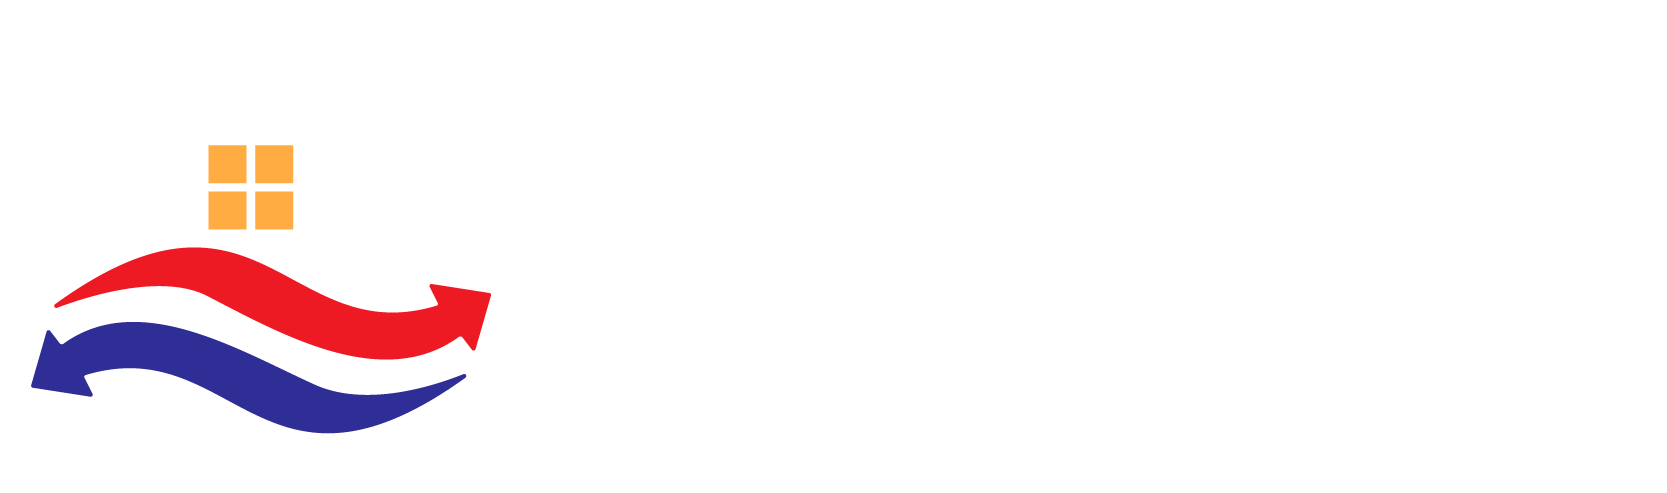 Home Comfort Solutions Logo